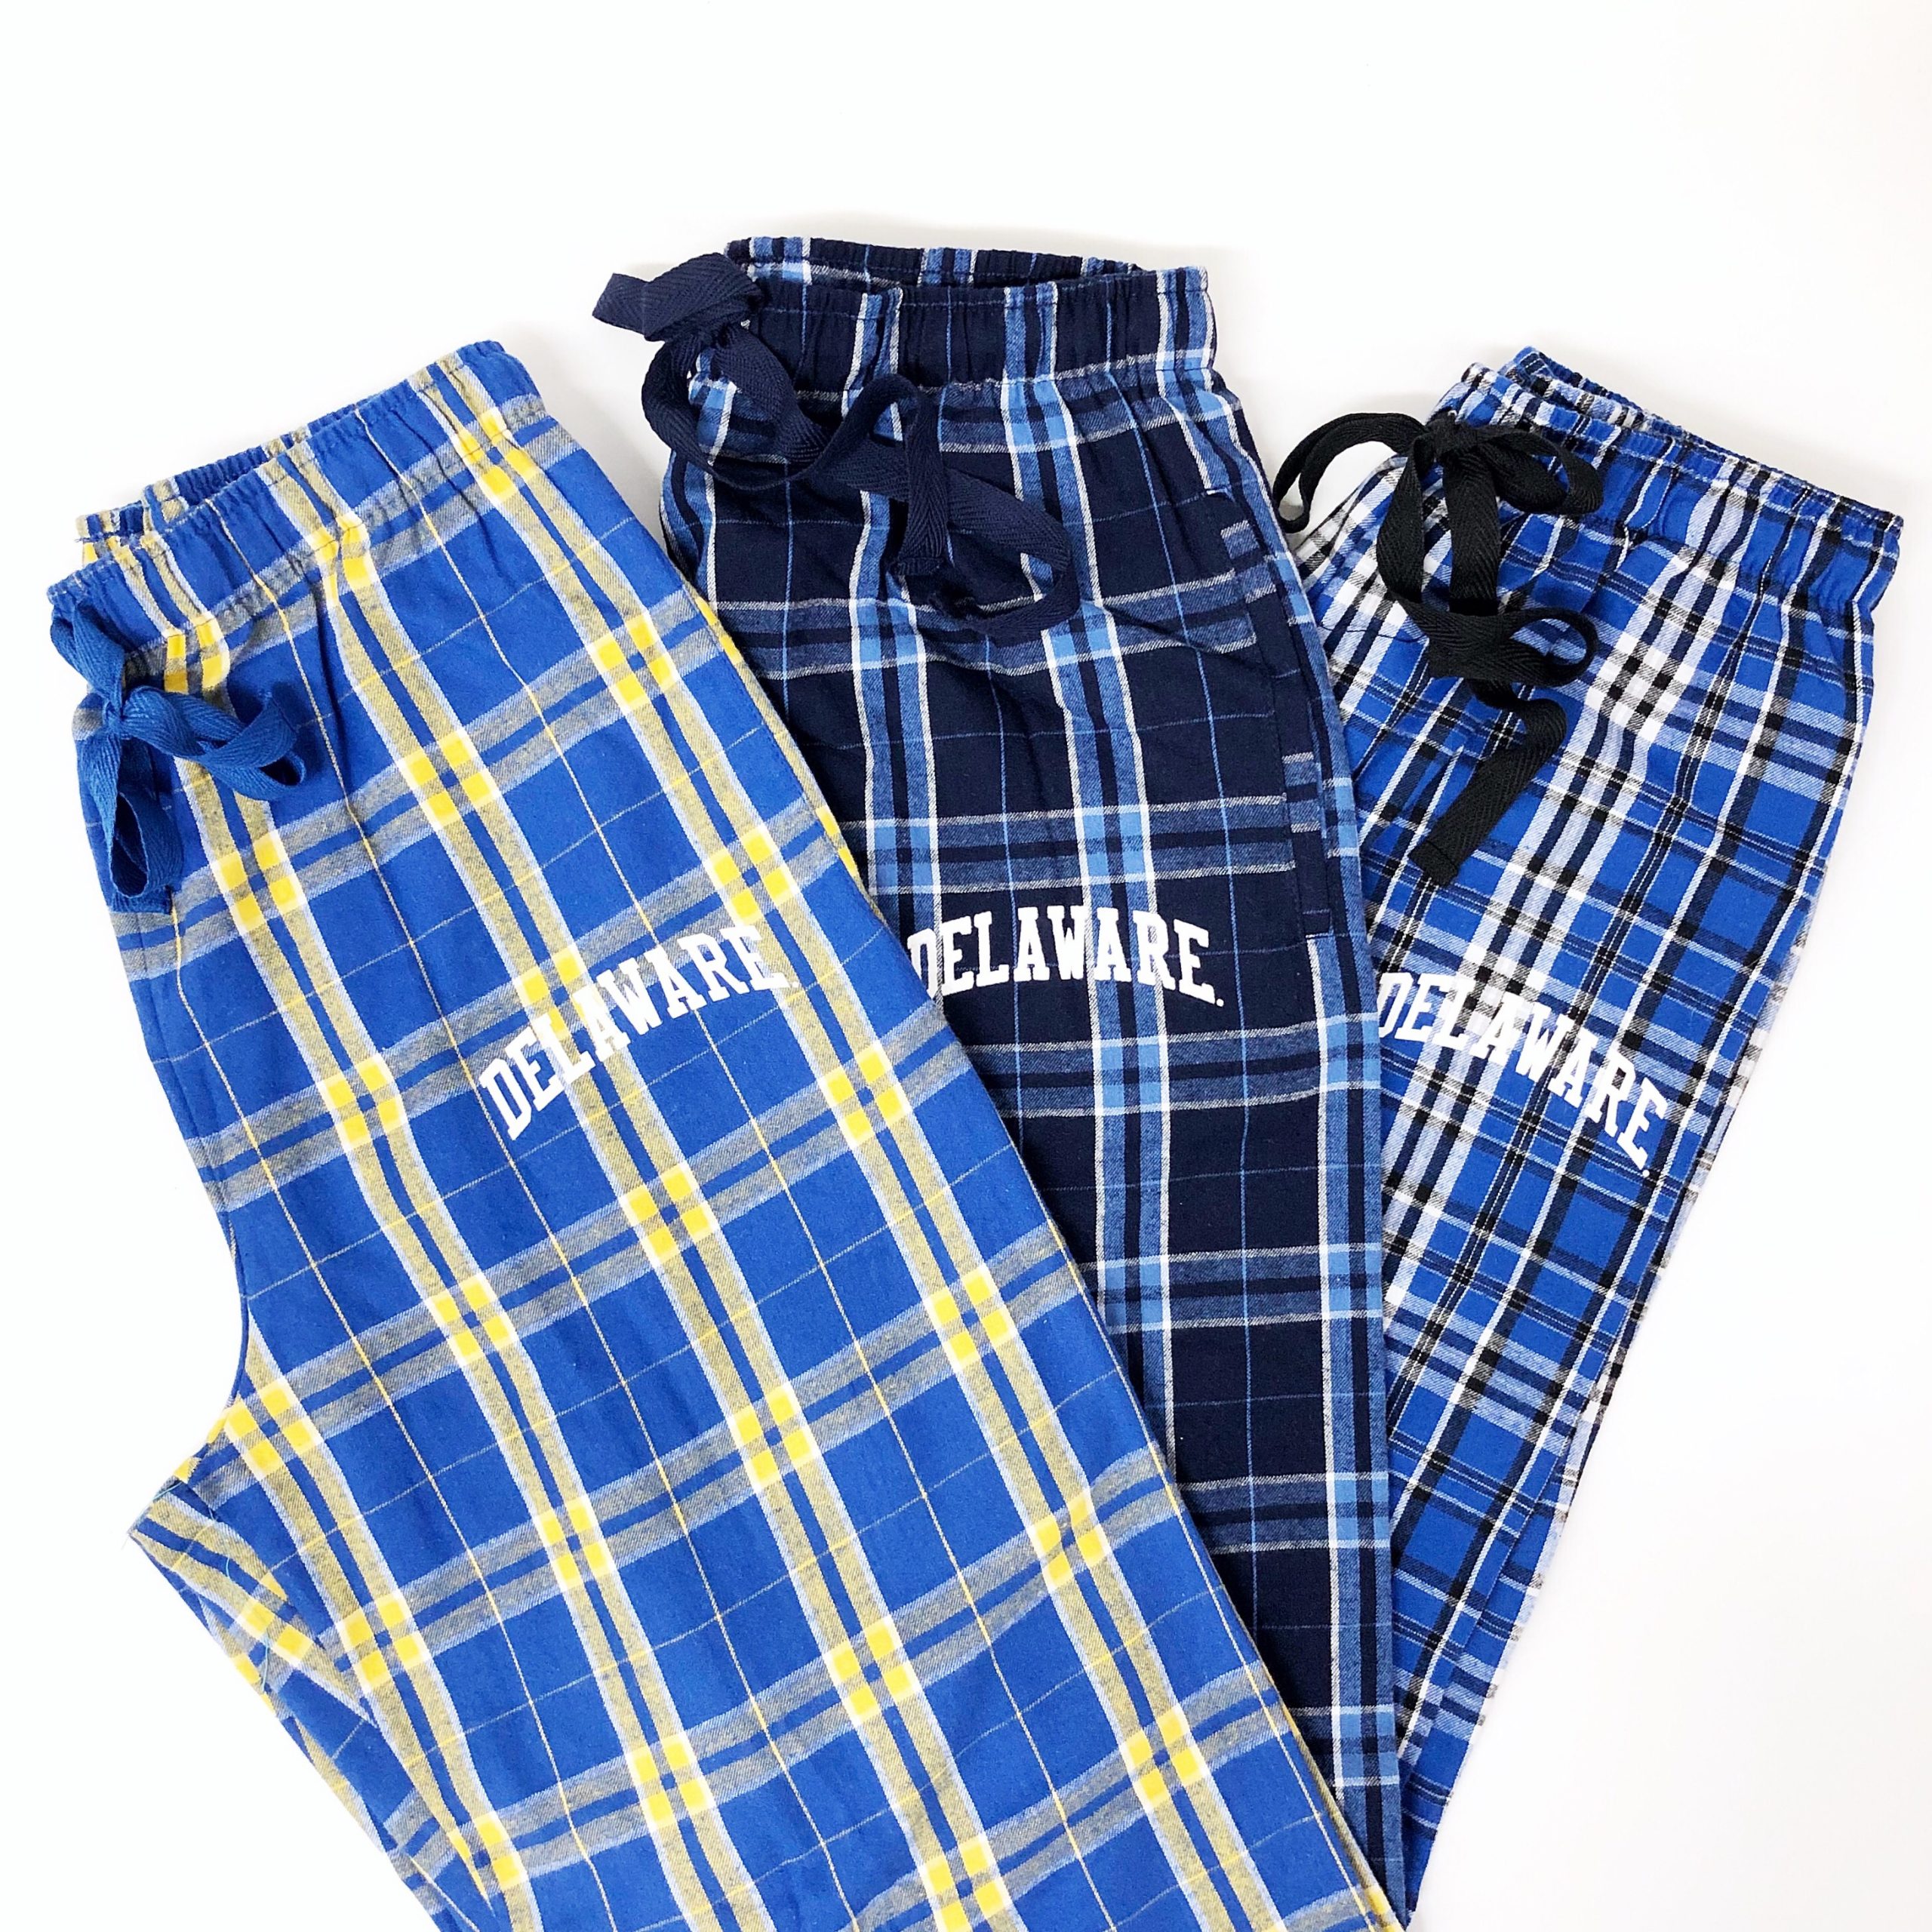 Delaware Flannel Pajama Bottoms